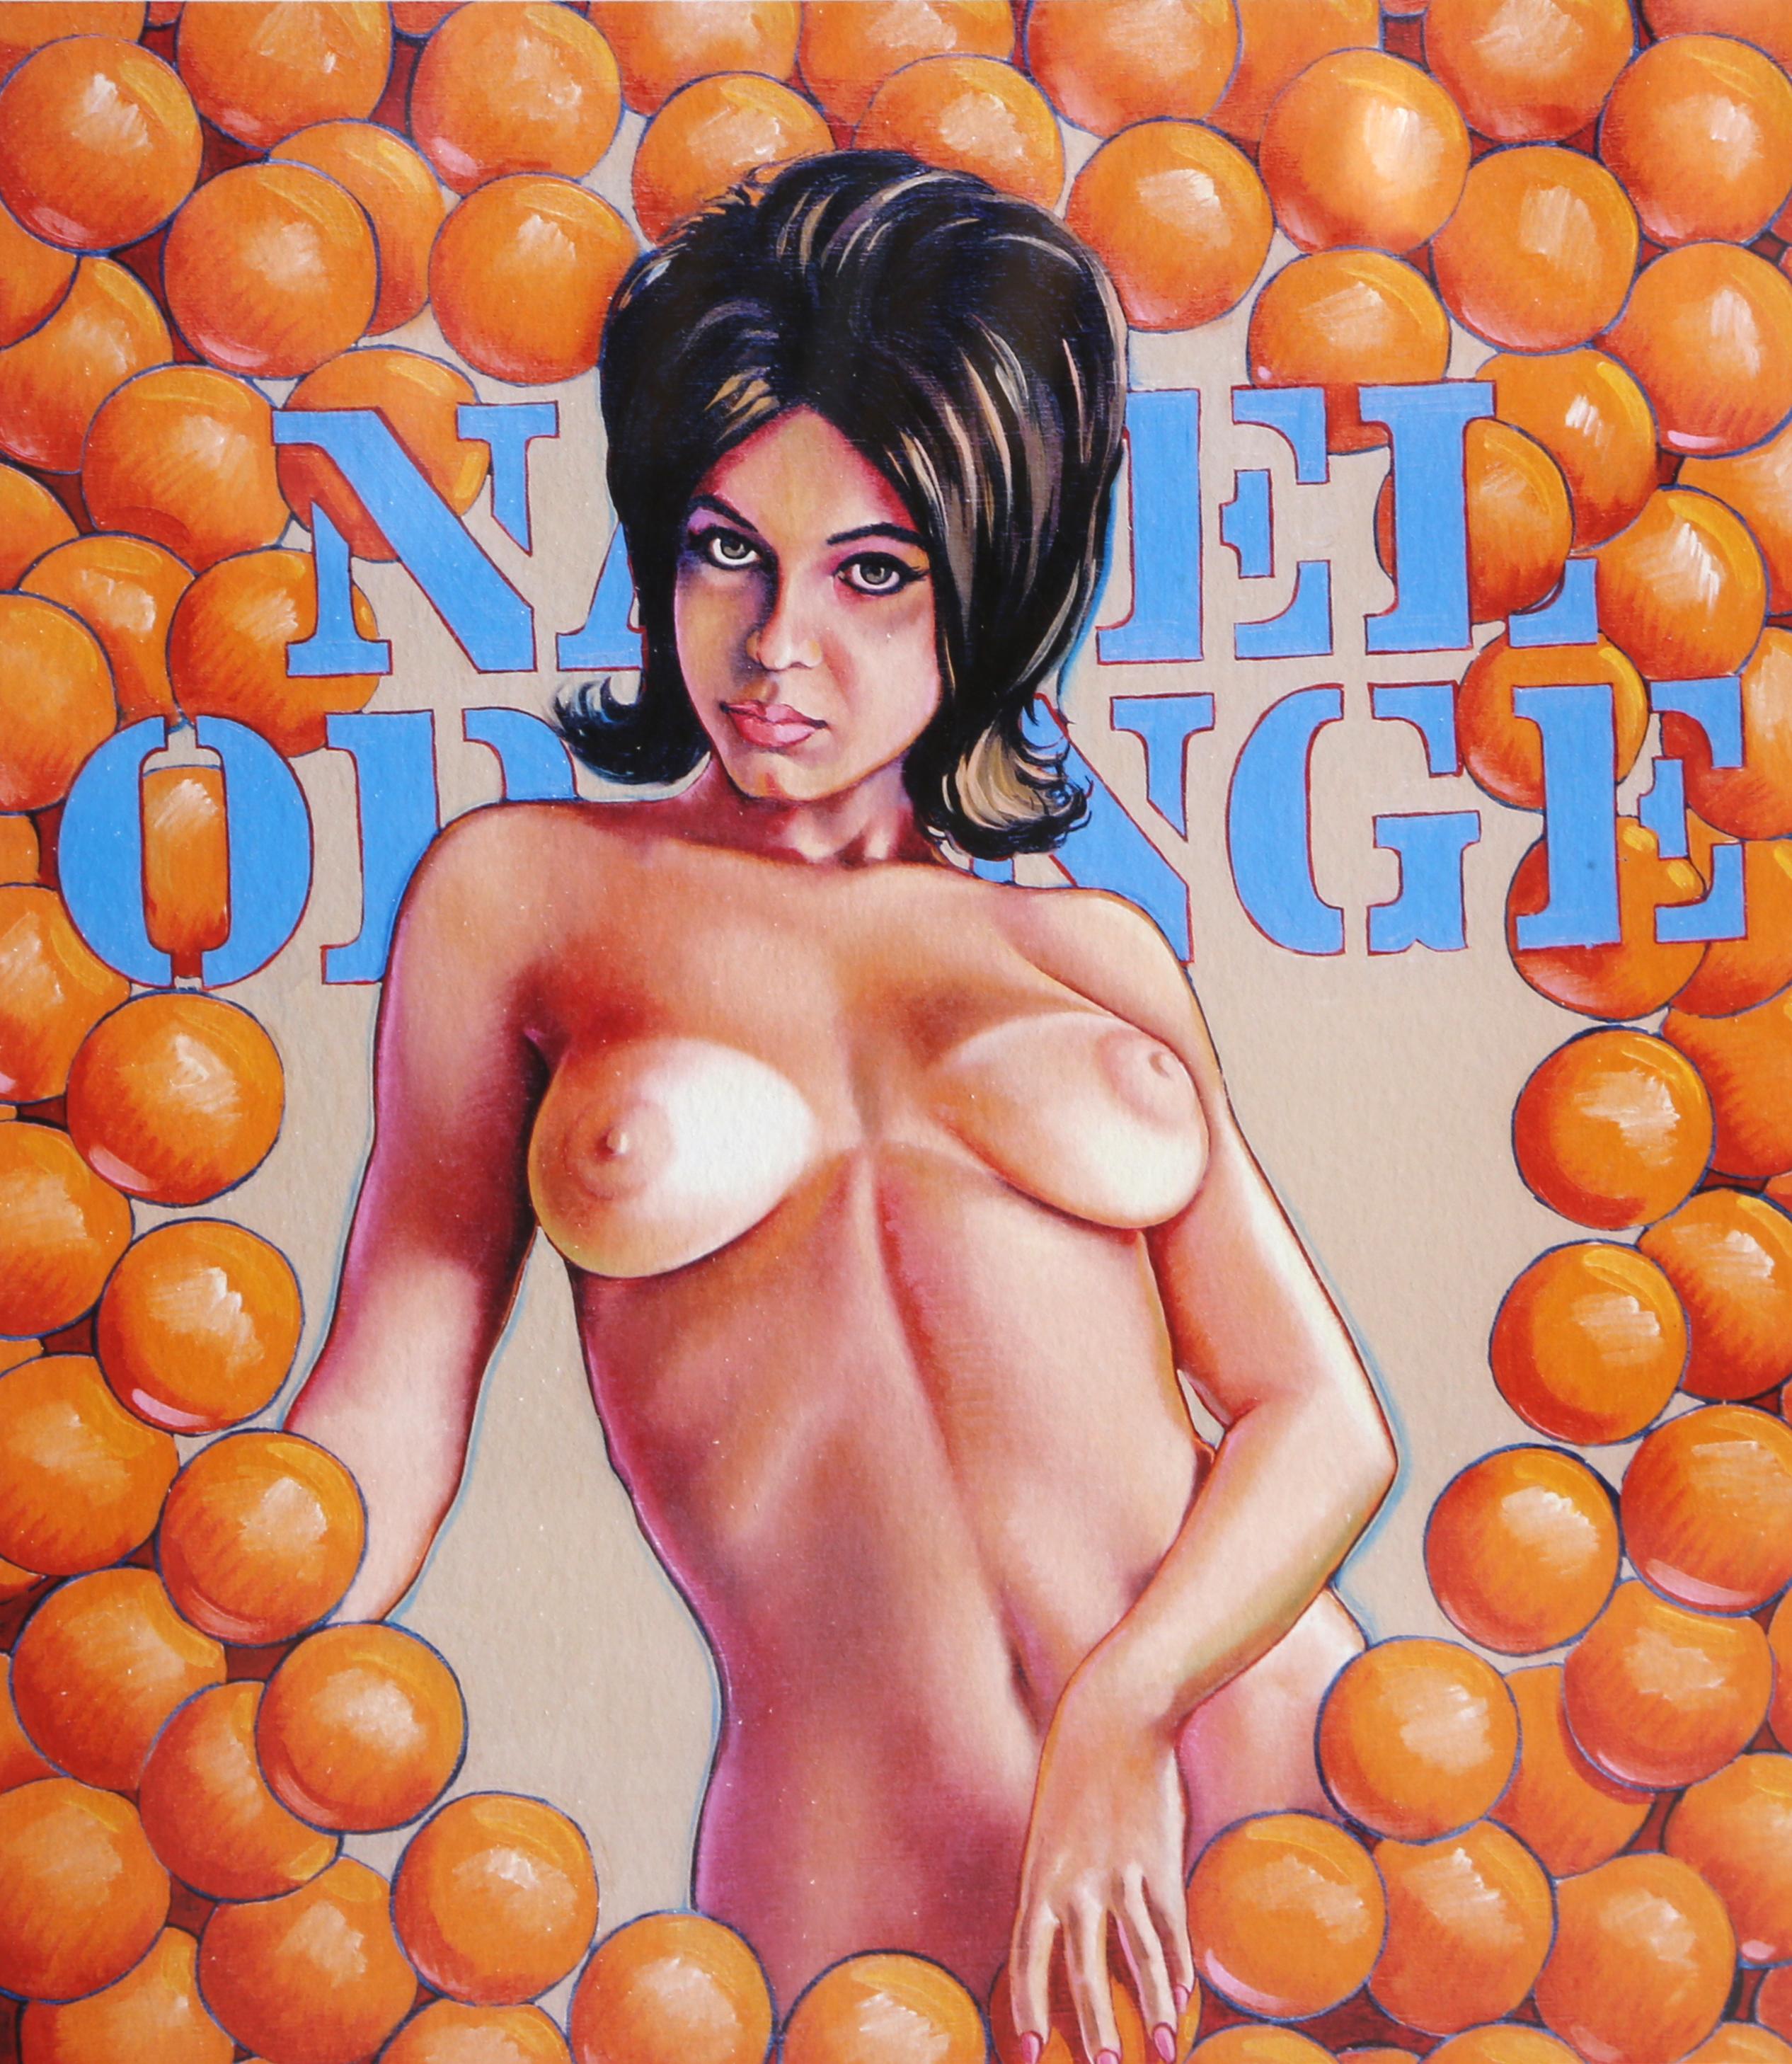 Navel Orange - Pop Art Print by Mel Ramos